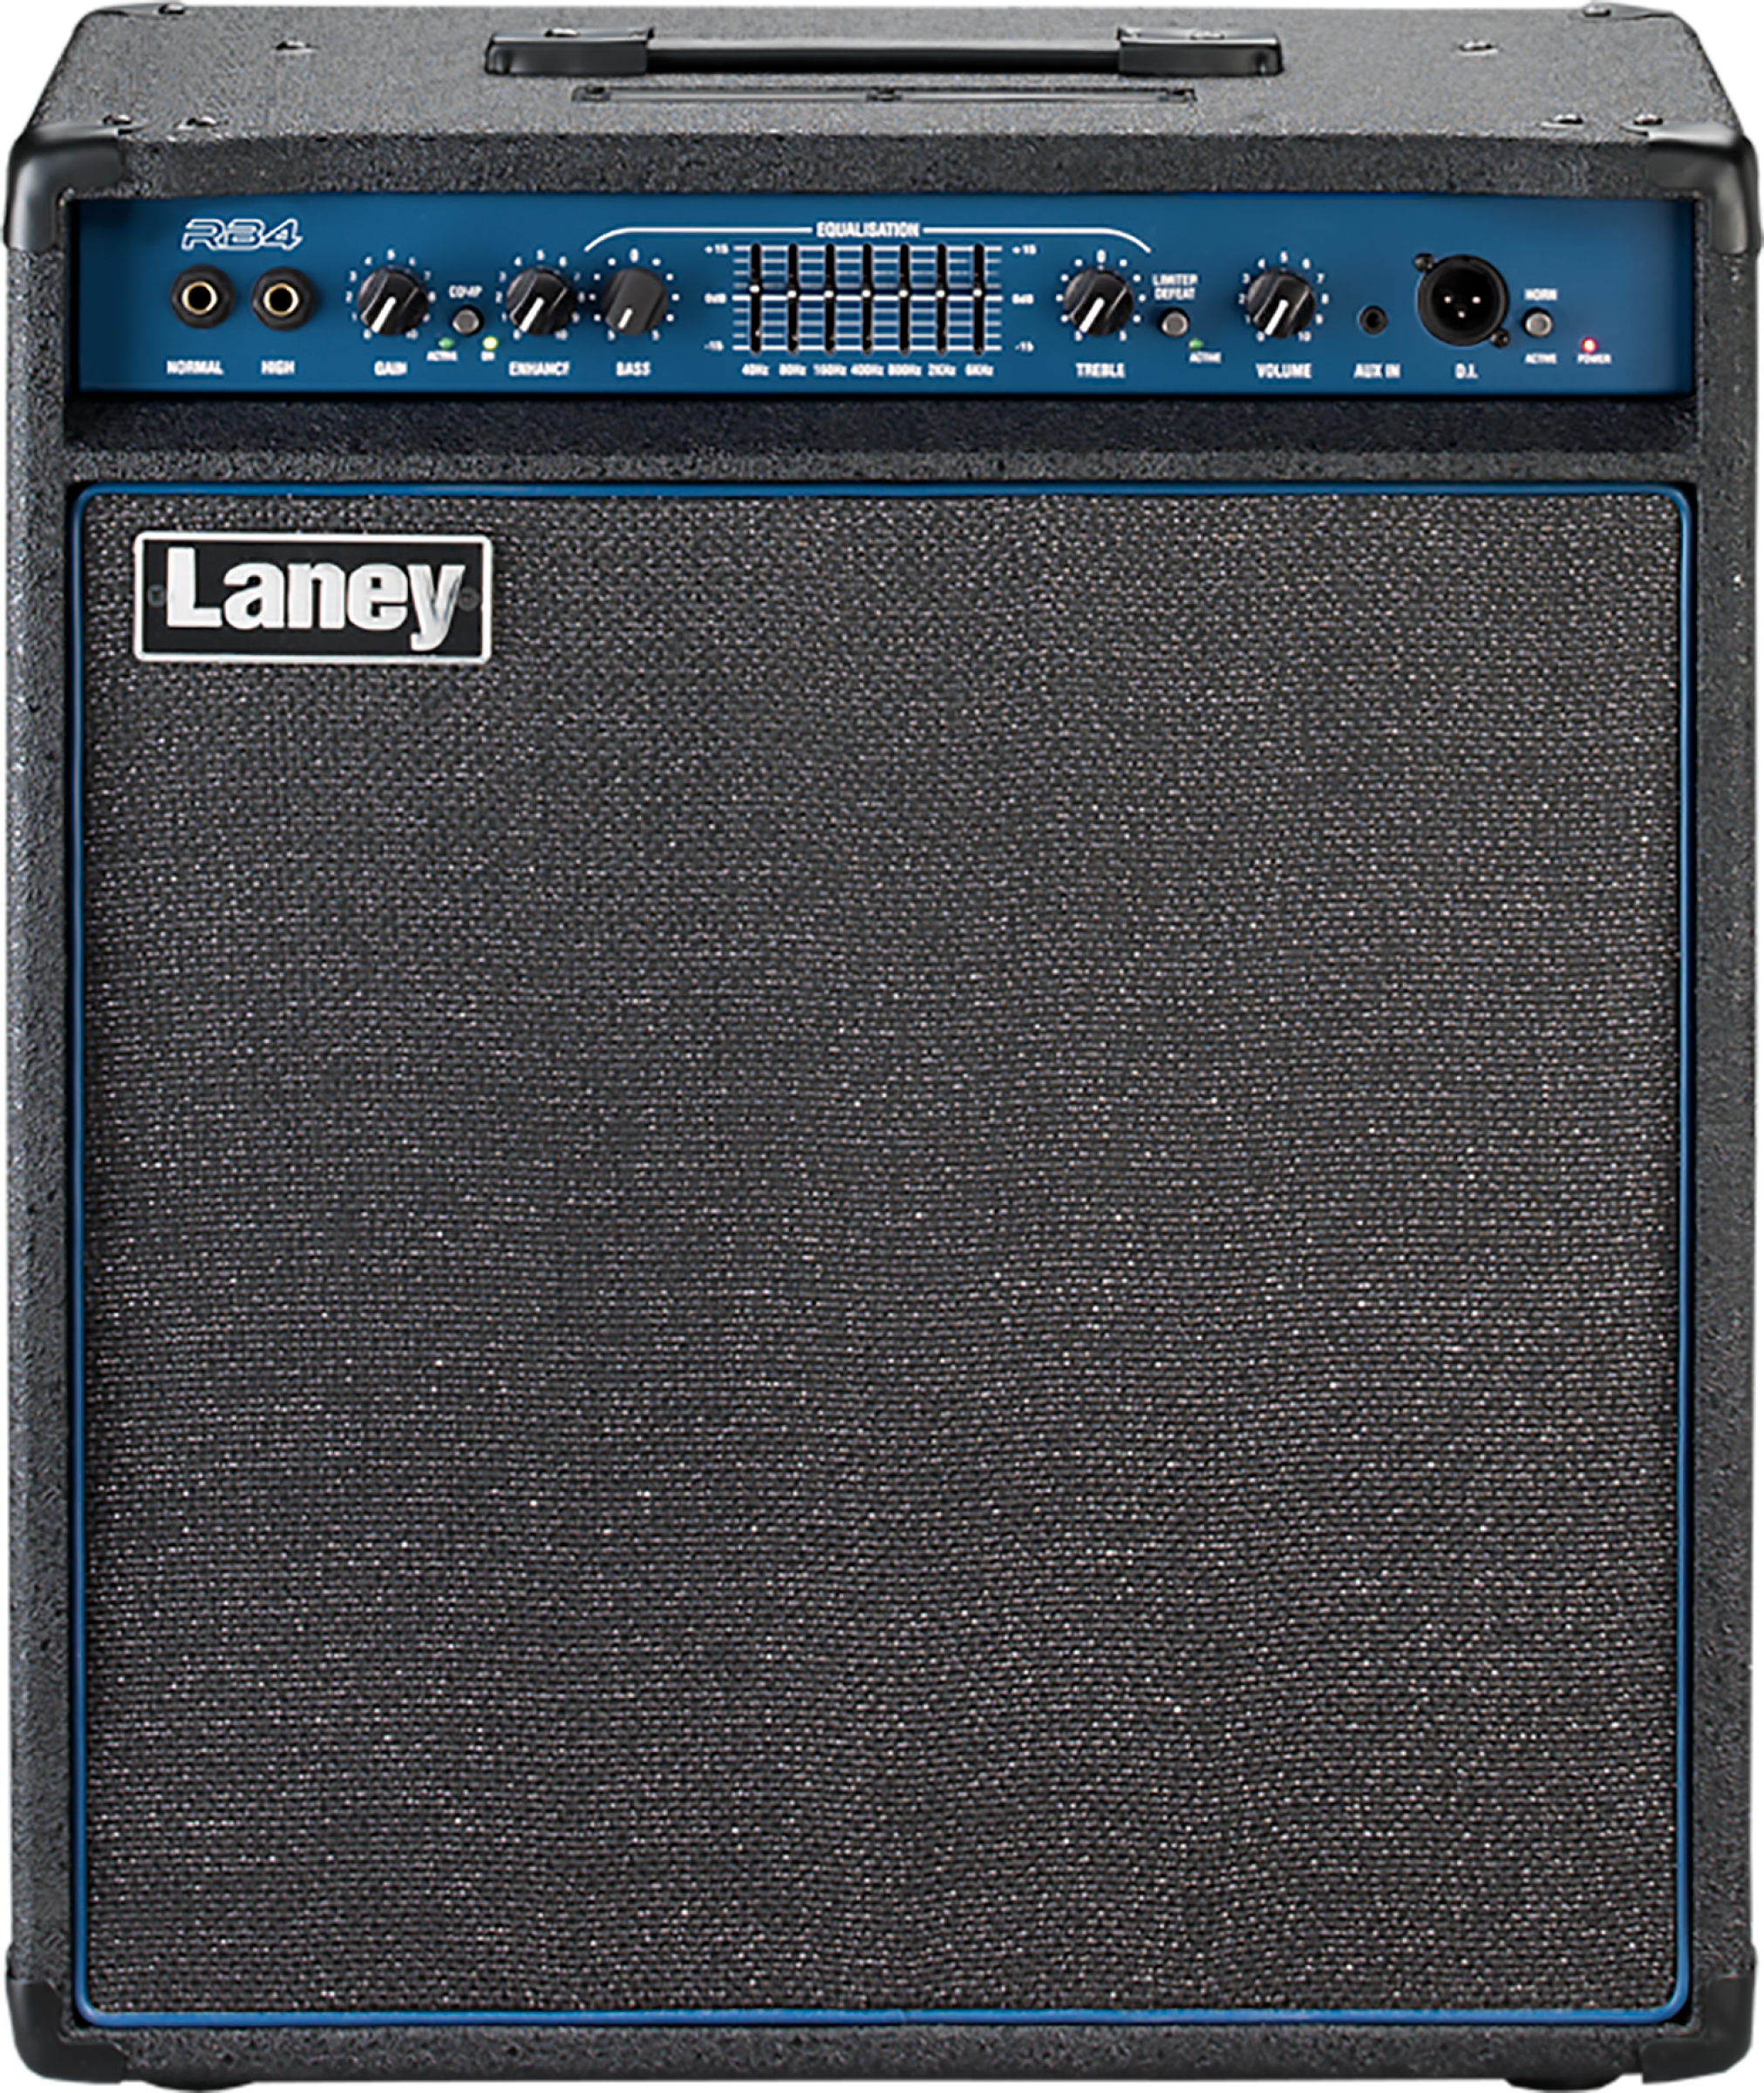 Laney Rb4 165w 1x15 - Combo amplificador para bajo - Main picture